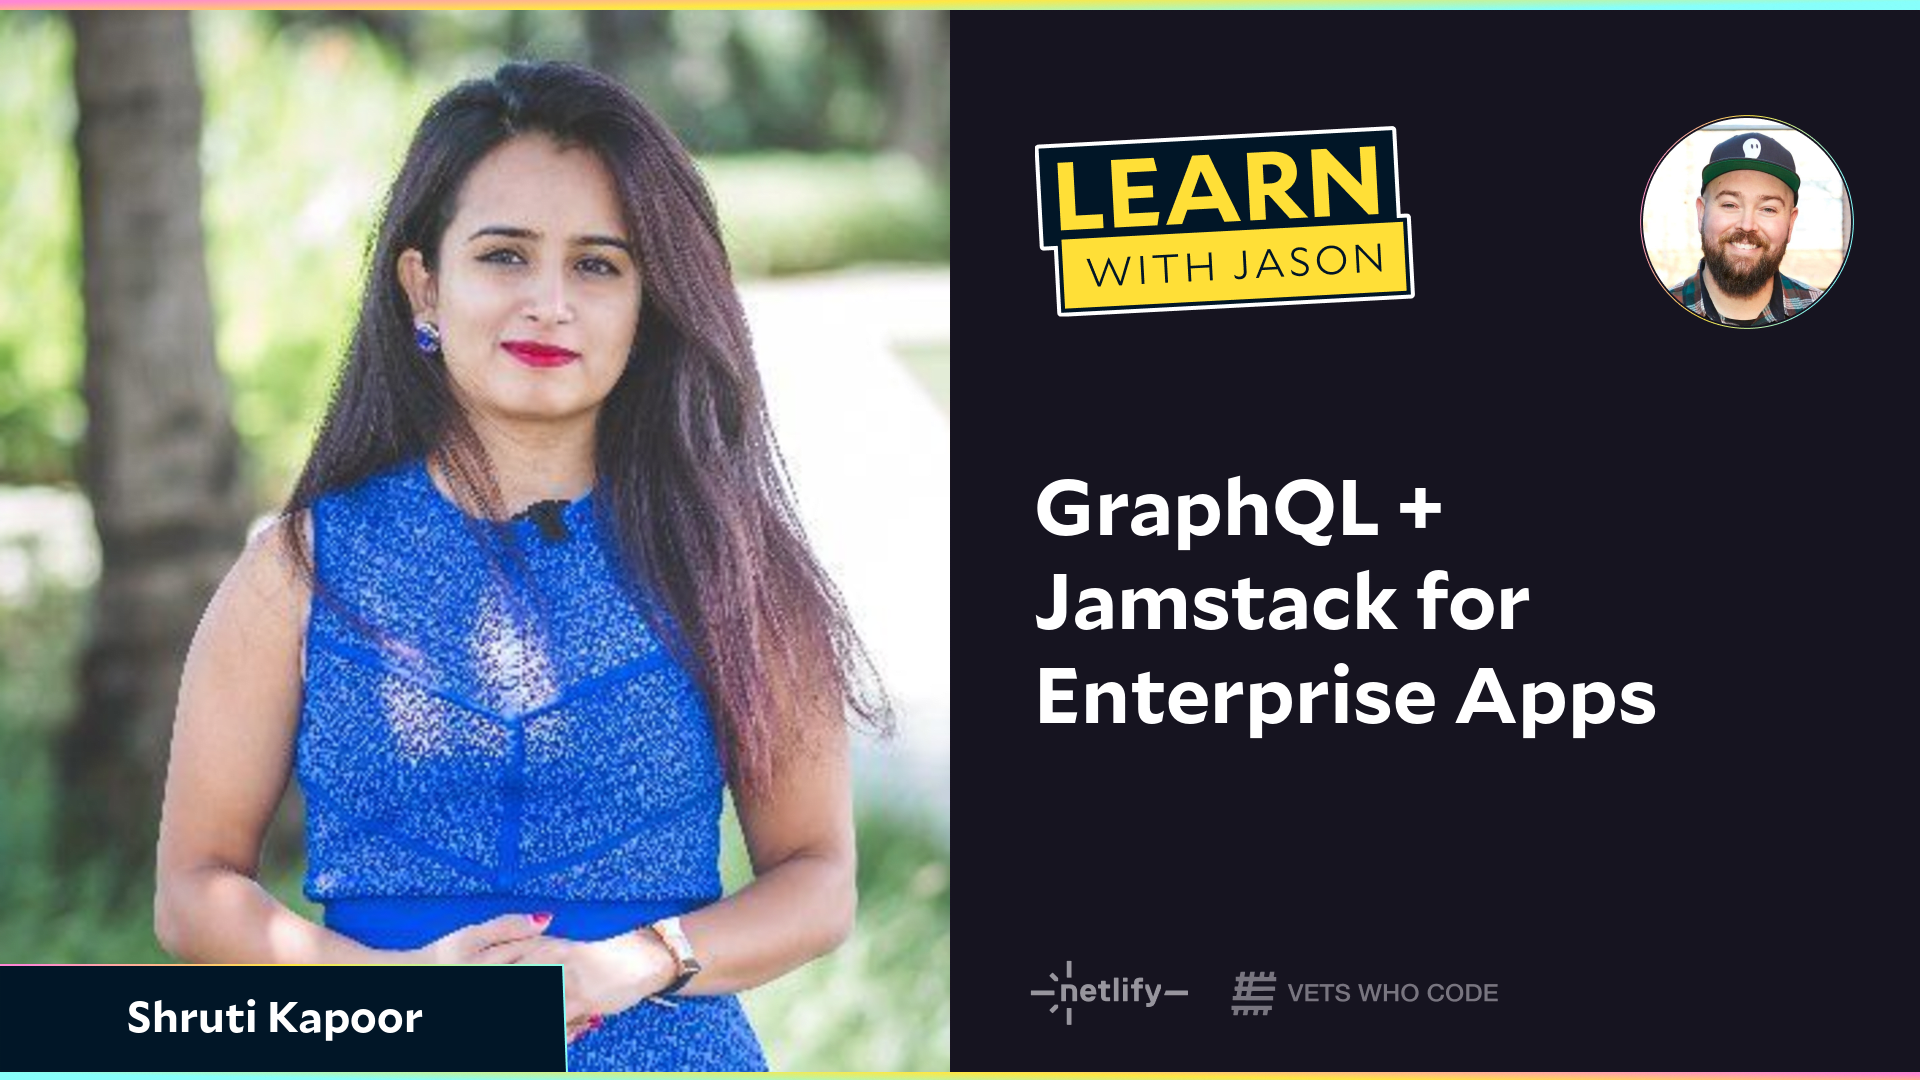 GraphQL + Jamstack for Enterprise Apps (with Shruti Kapoor)